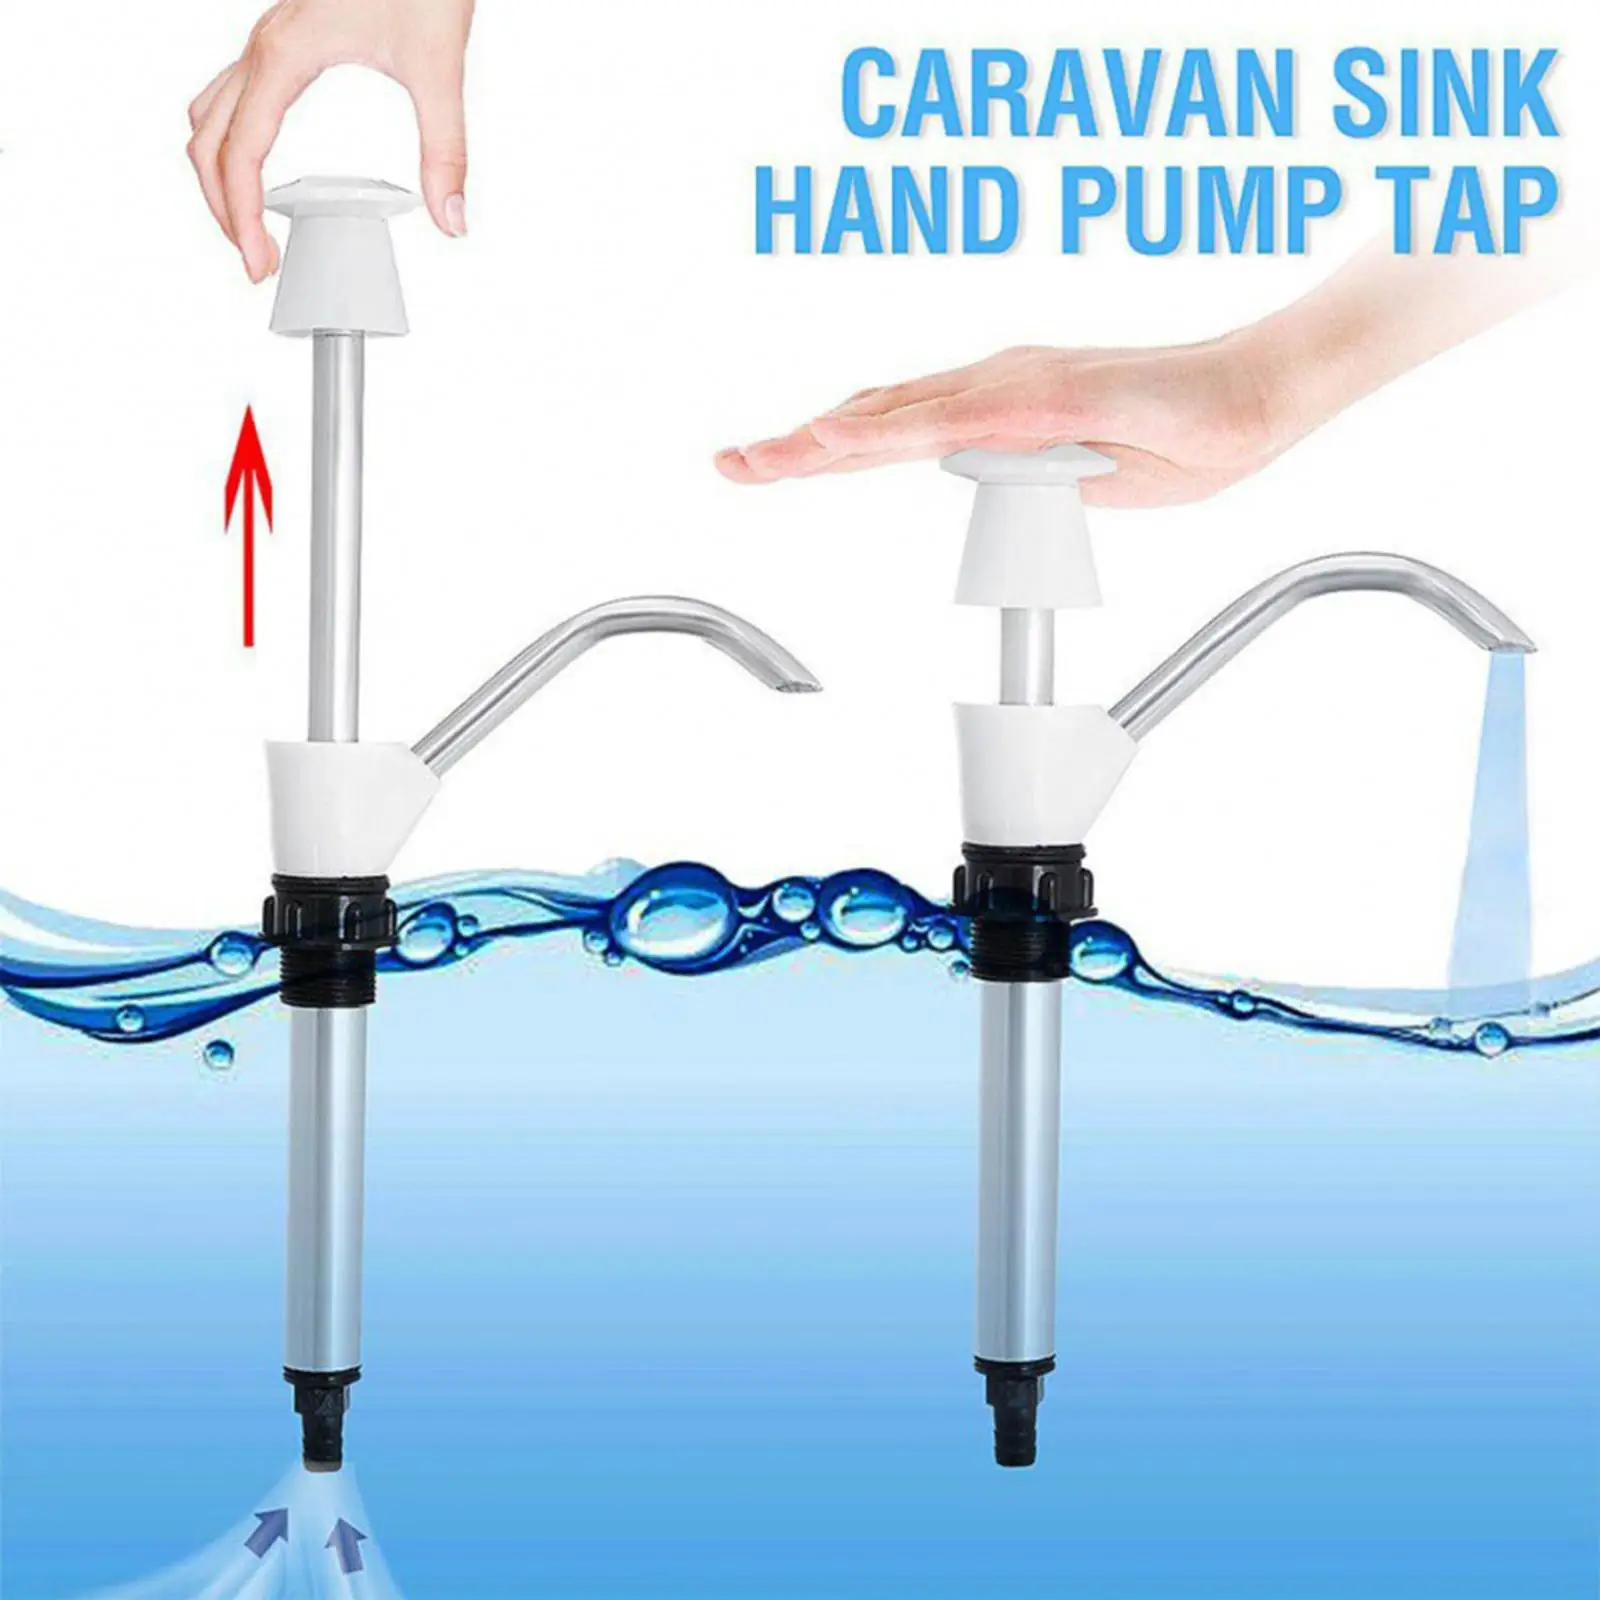 Sink Water Hand Pump Faucet Hand Pump Tap for Camper Trailer RV BBQ Supplies Accessories